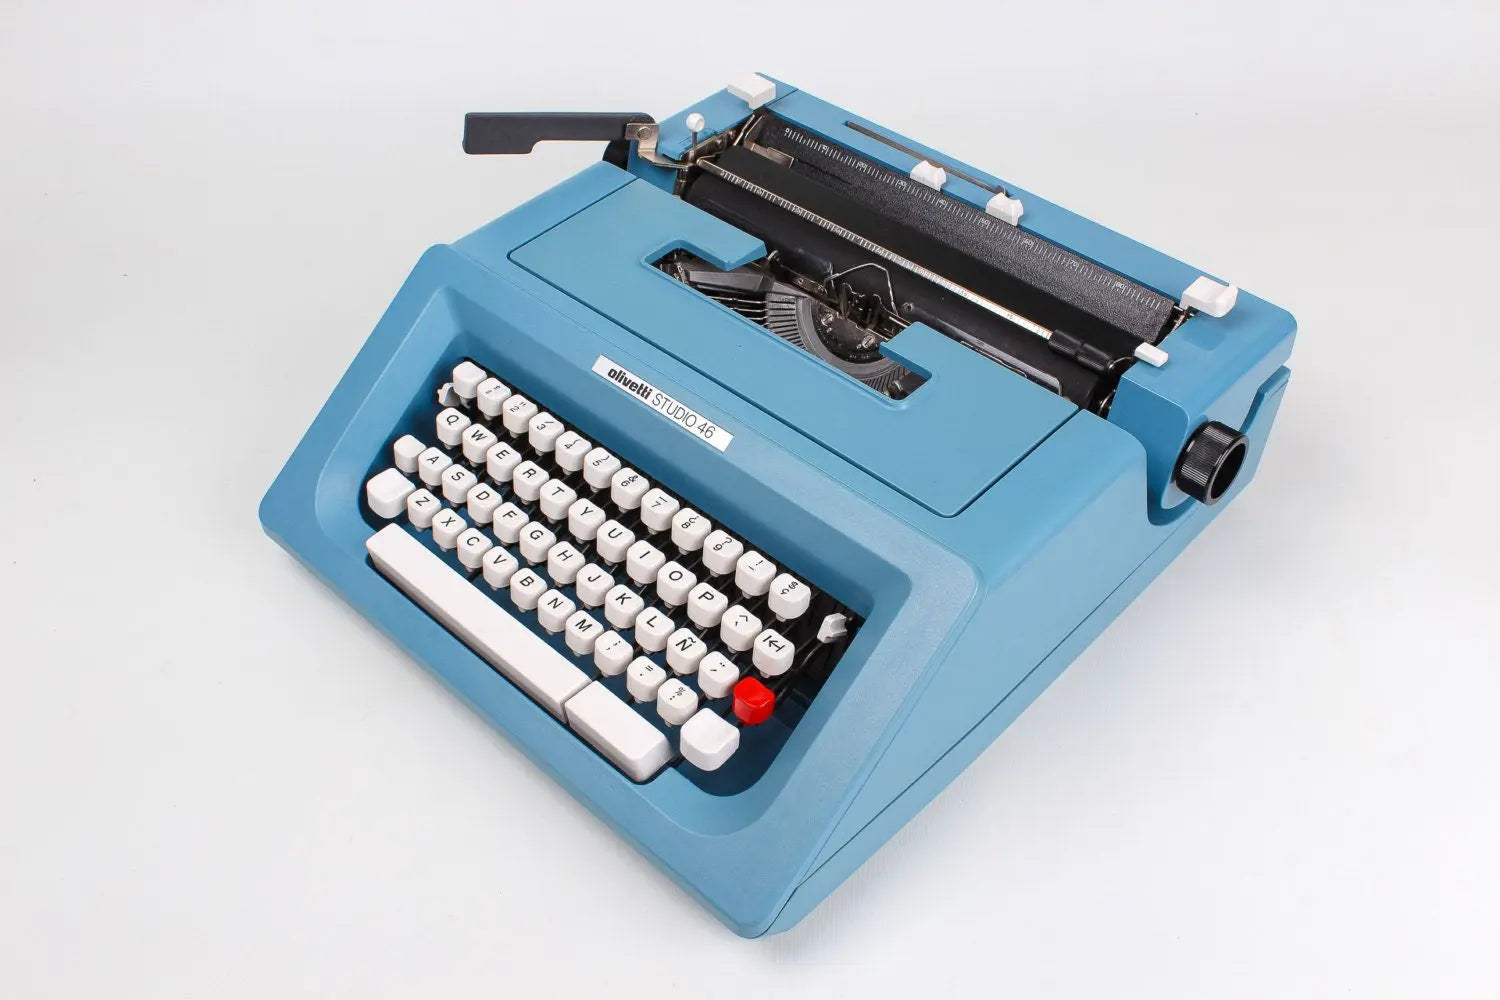 Olivetti Studio 46 Blue Typewriter, Vintage, Manual Portable, Professionally Serviced by Typewriter.Company - ElGranero Typewriter.Company